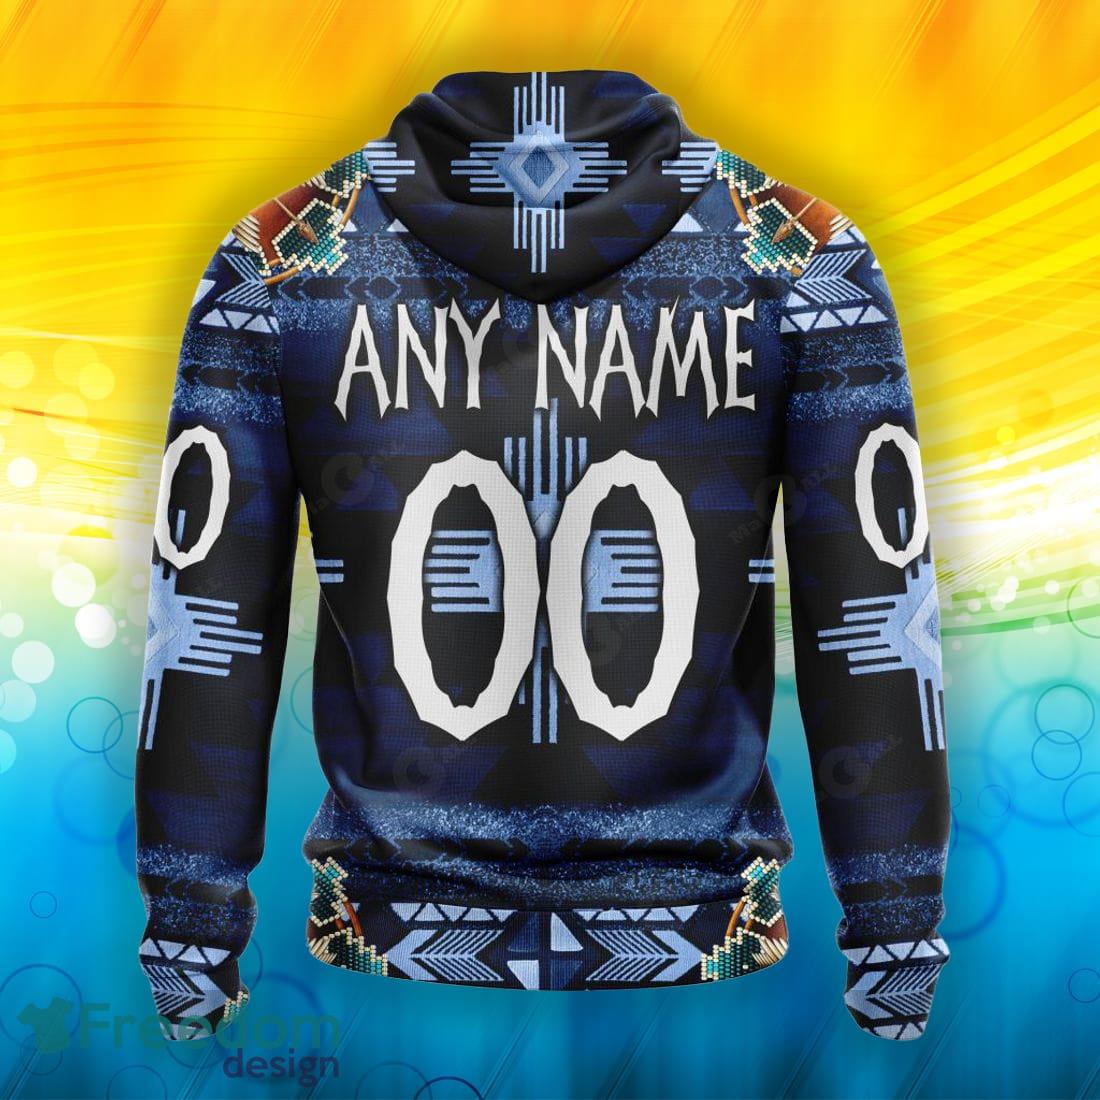 Available] Buy New Custom Columbus Blue Jackets Jersey